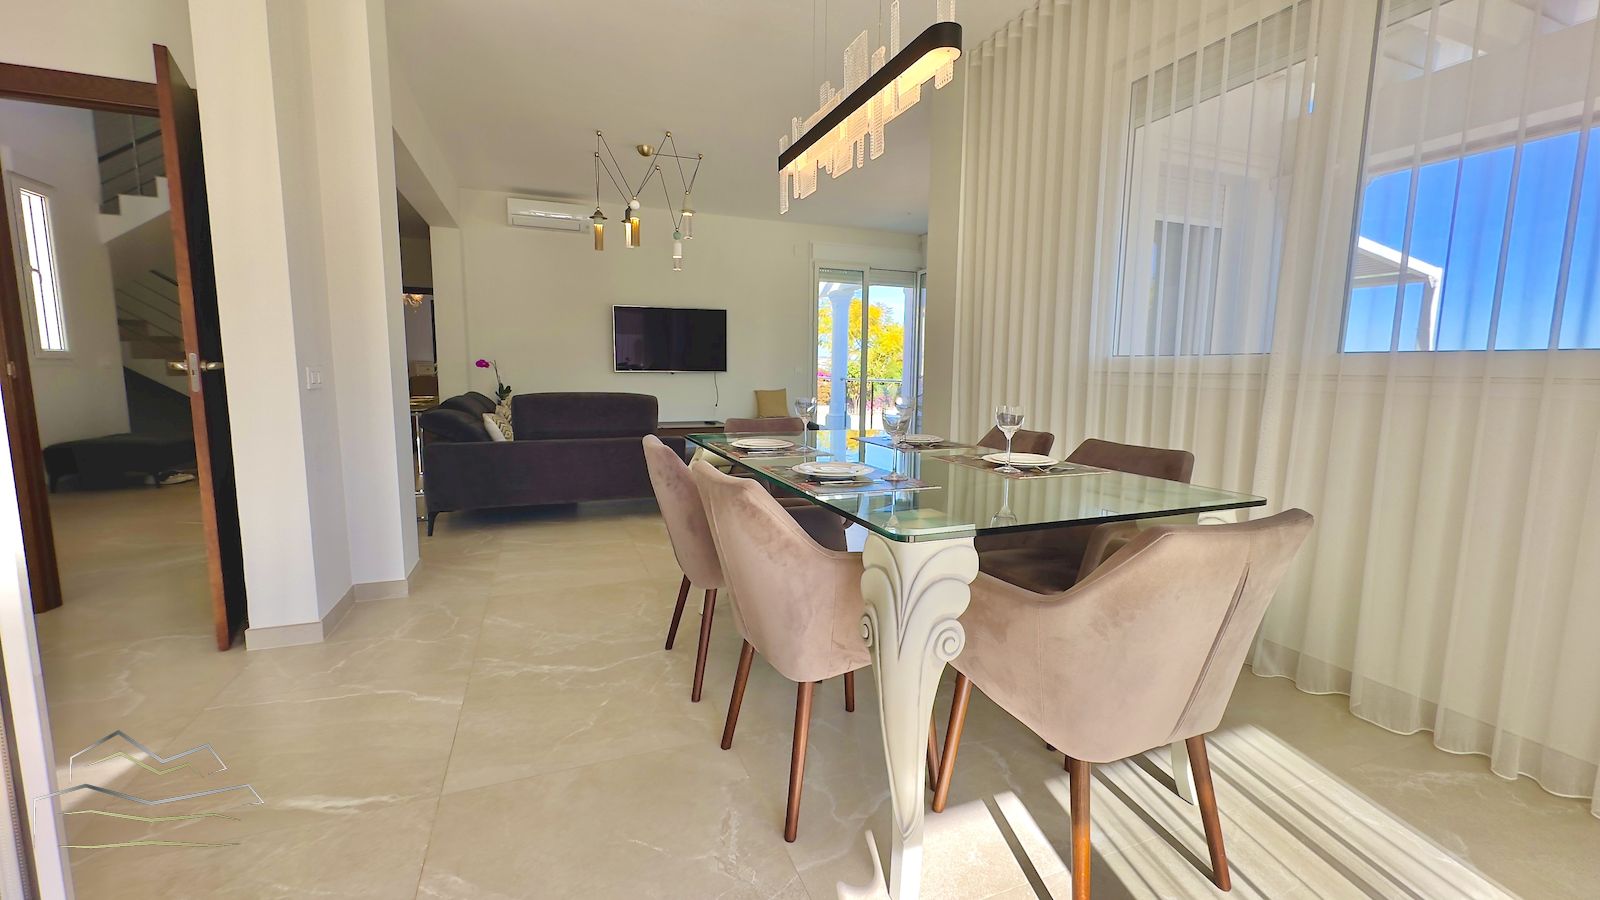 Villa for Sale with Sea View in Pinosol - Javea